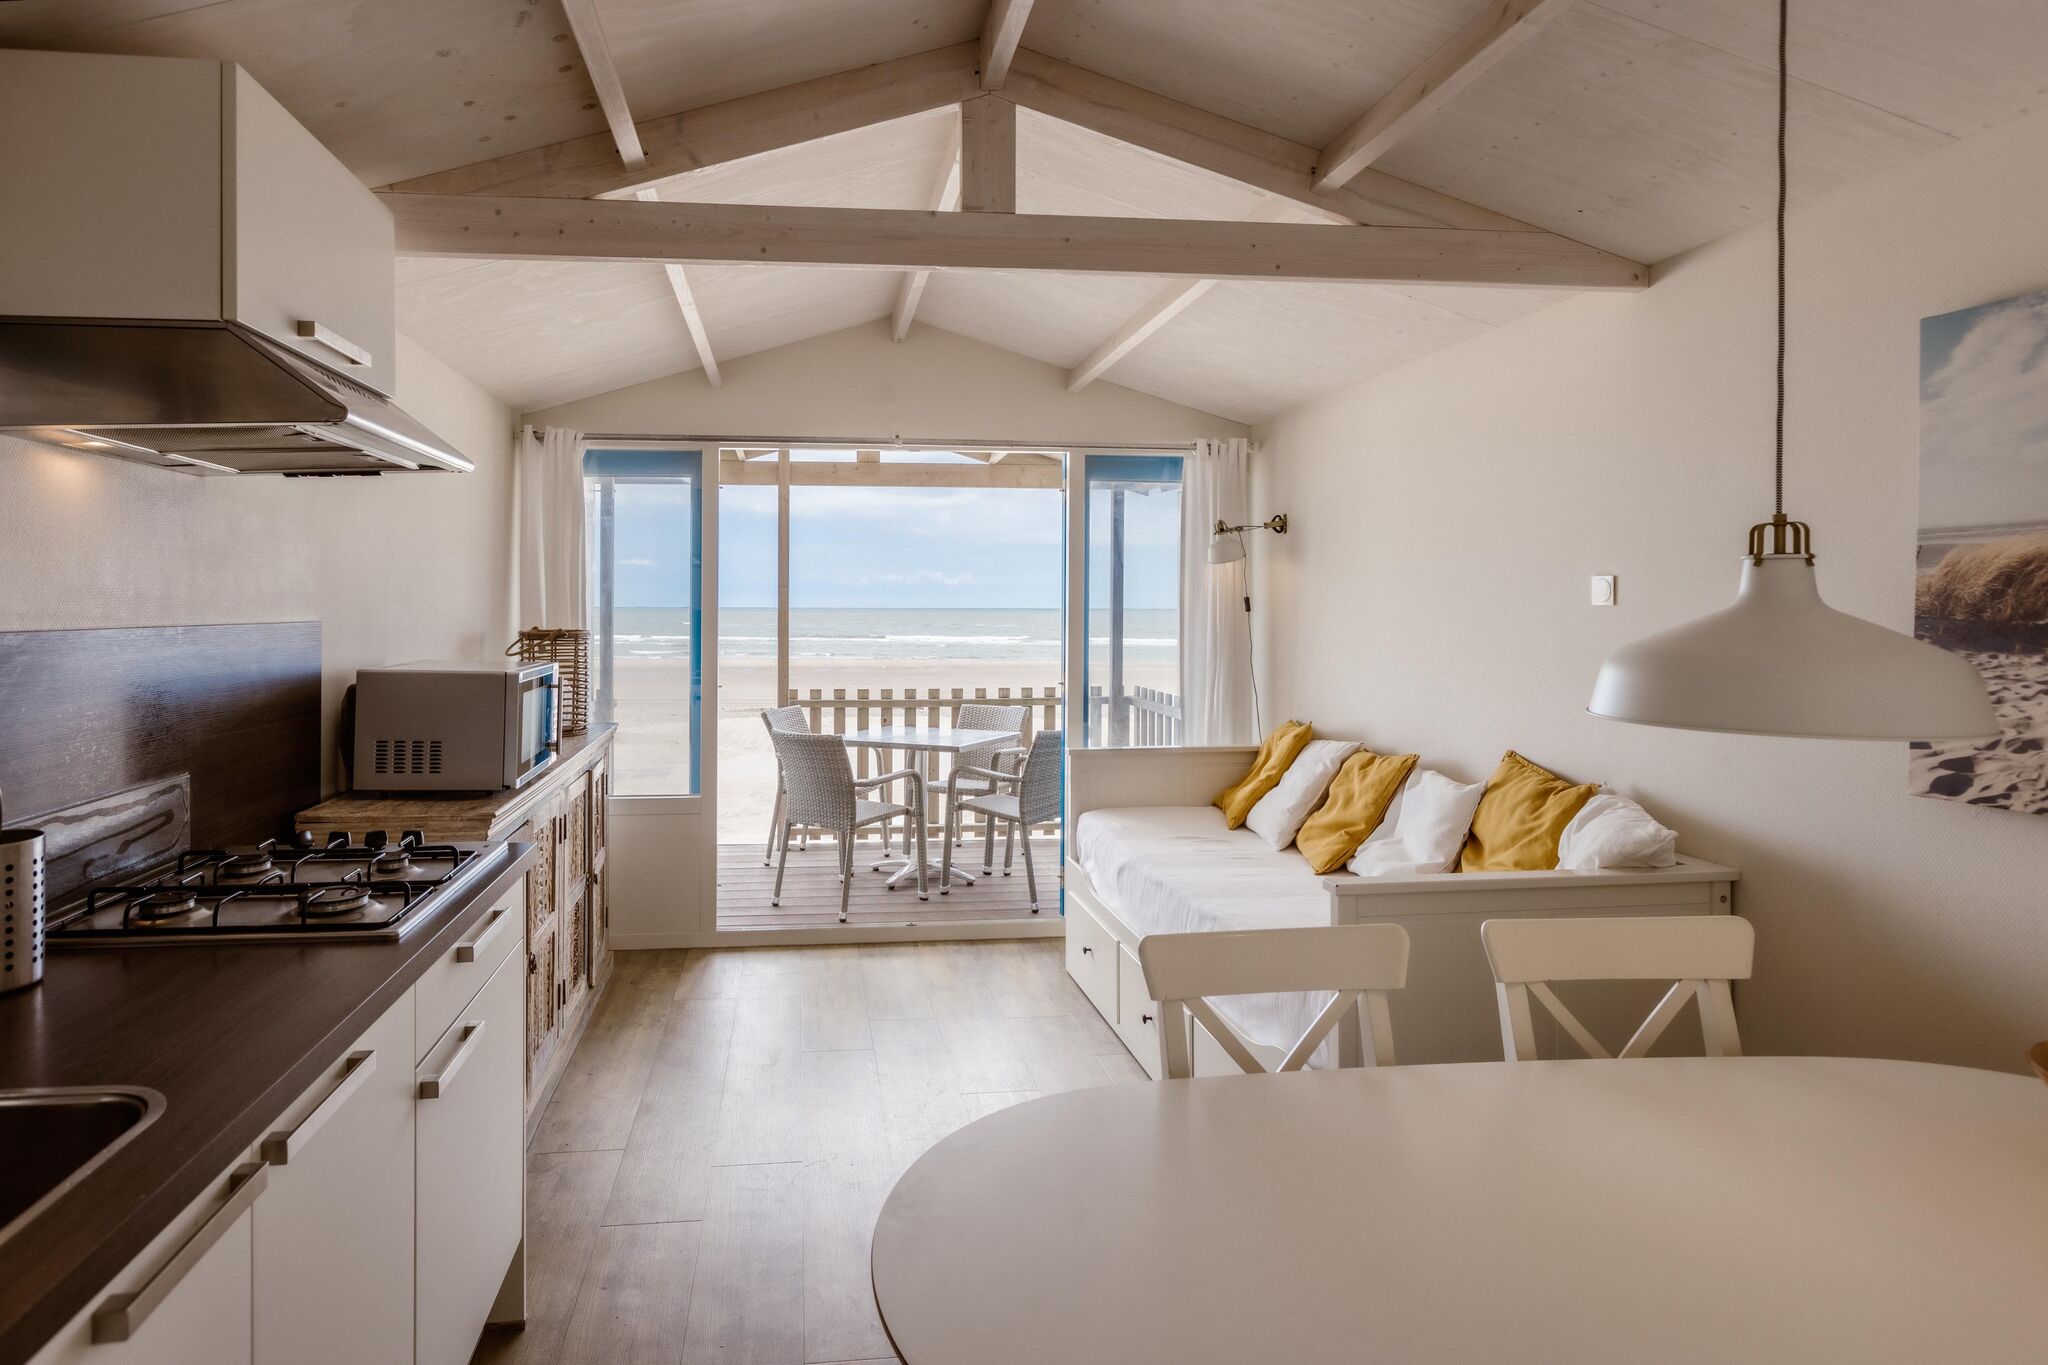 Schönes Strandhaus mit direktem Meerblick am Nordseestrand von Wijk aan Zee